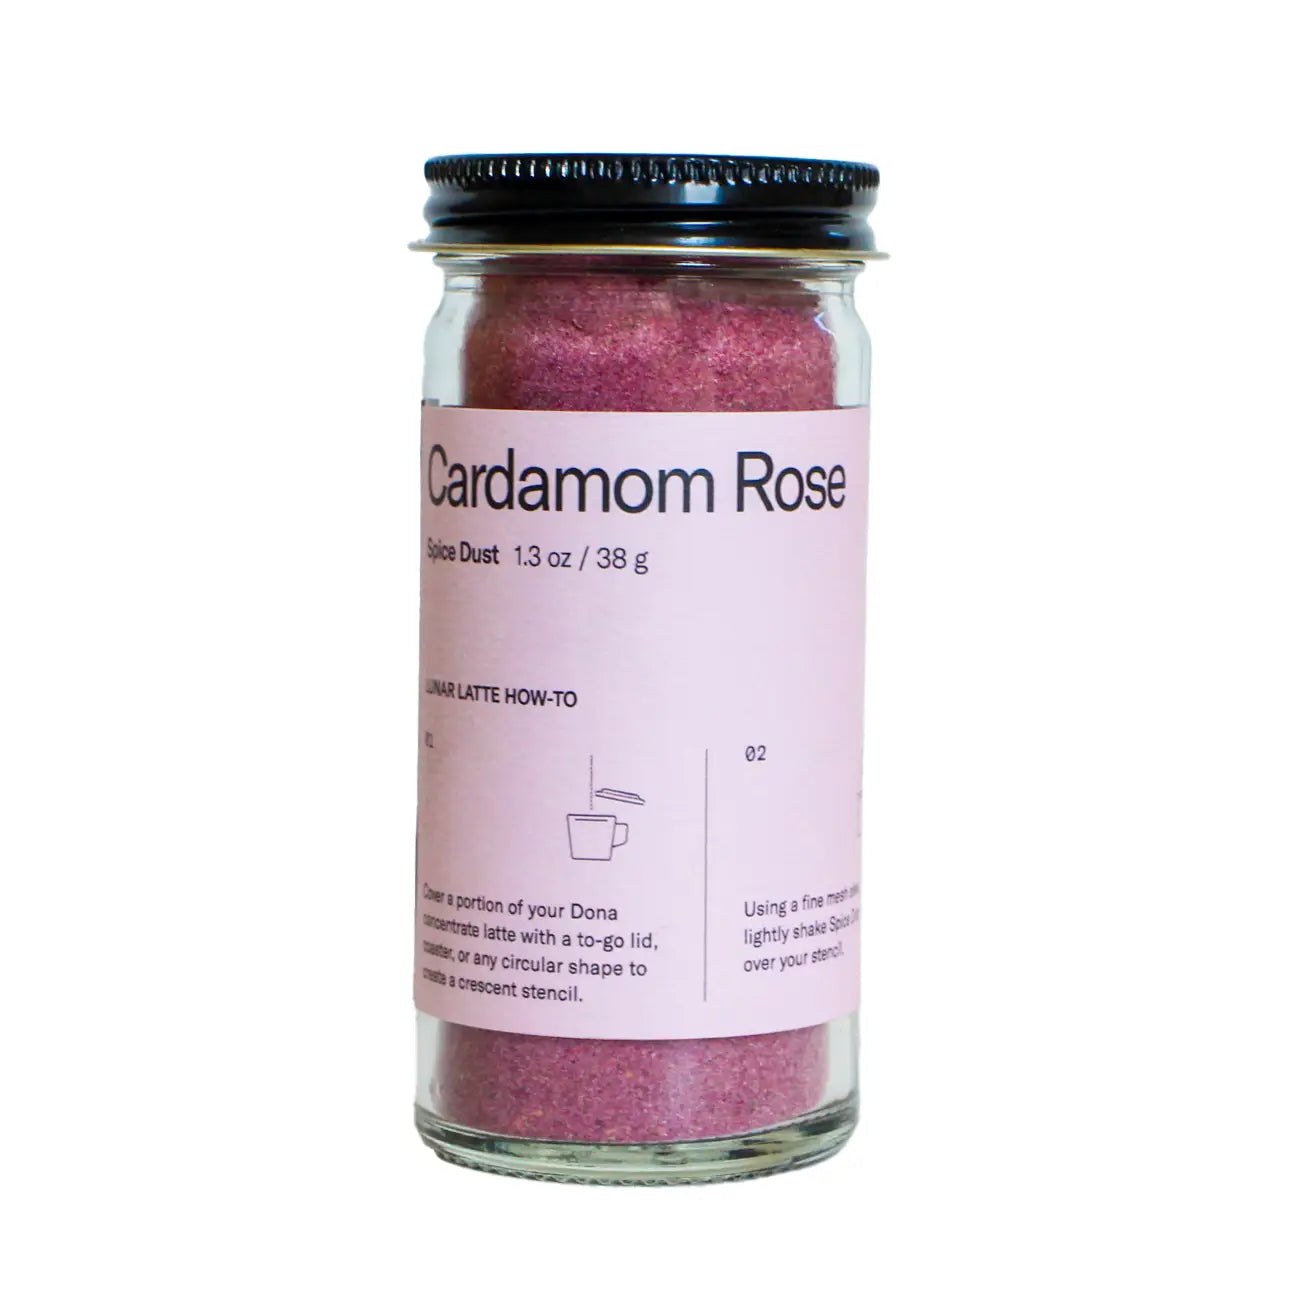 Cardamom Rose Spice Dust